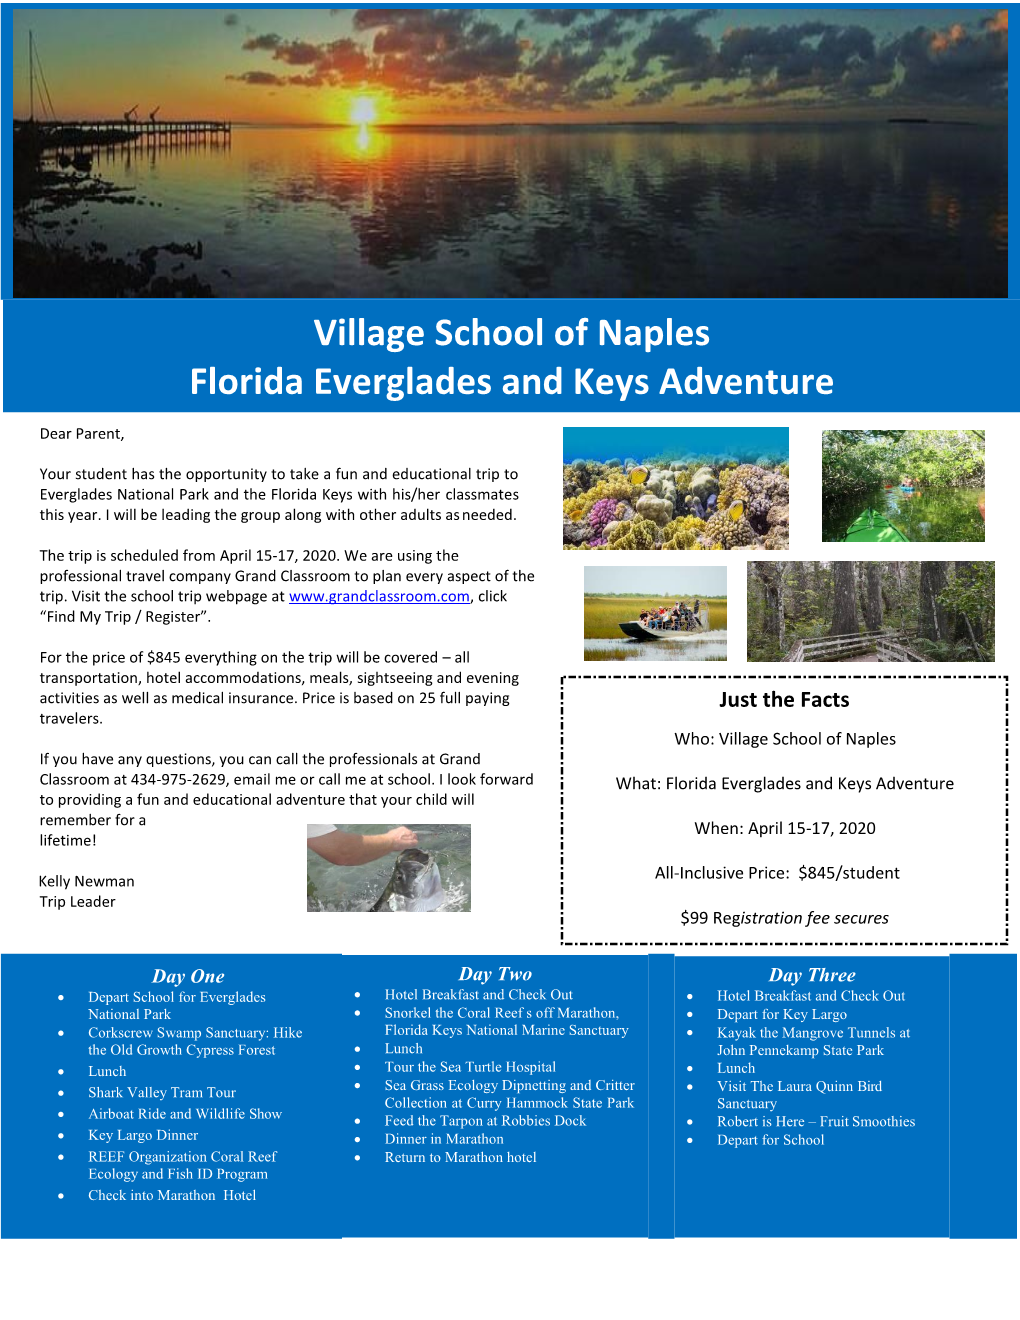 Village School of Naples Florida Everglades and Keys Adventure